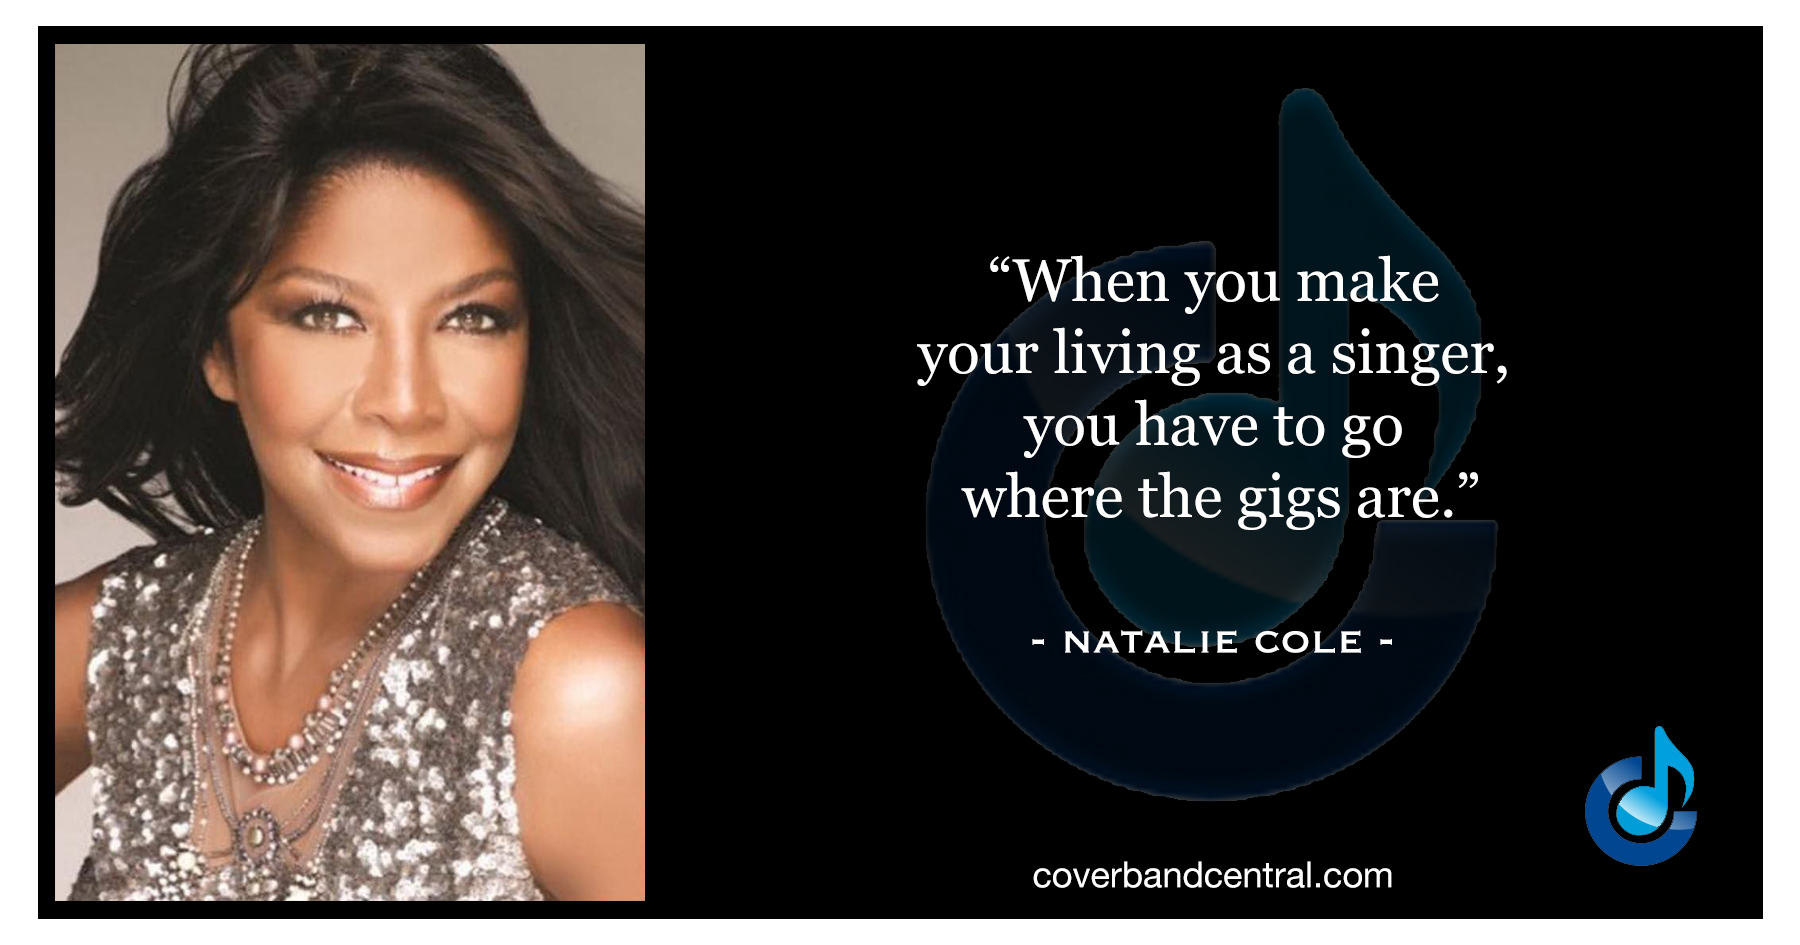 Natalie Cole quote